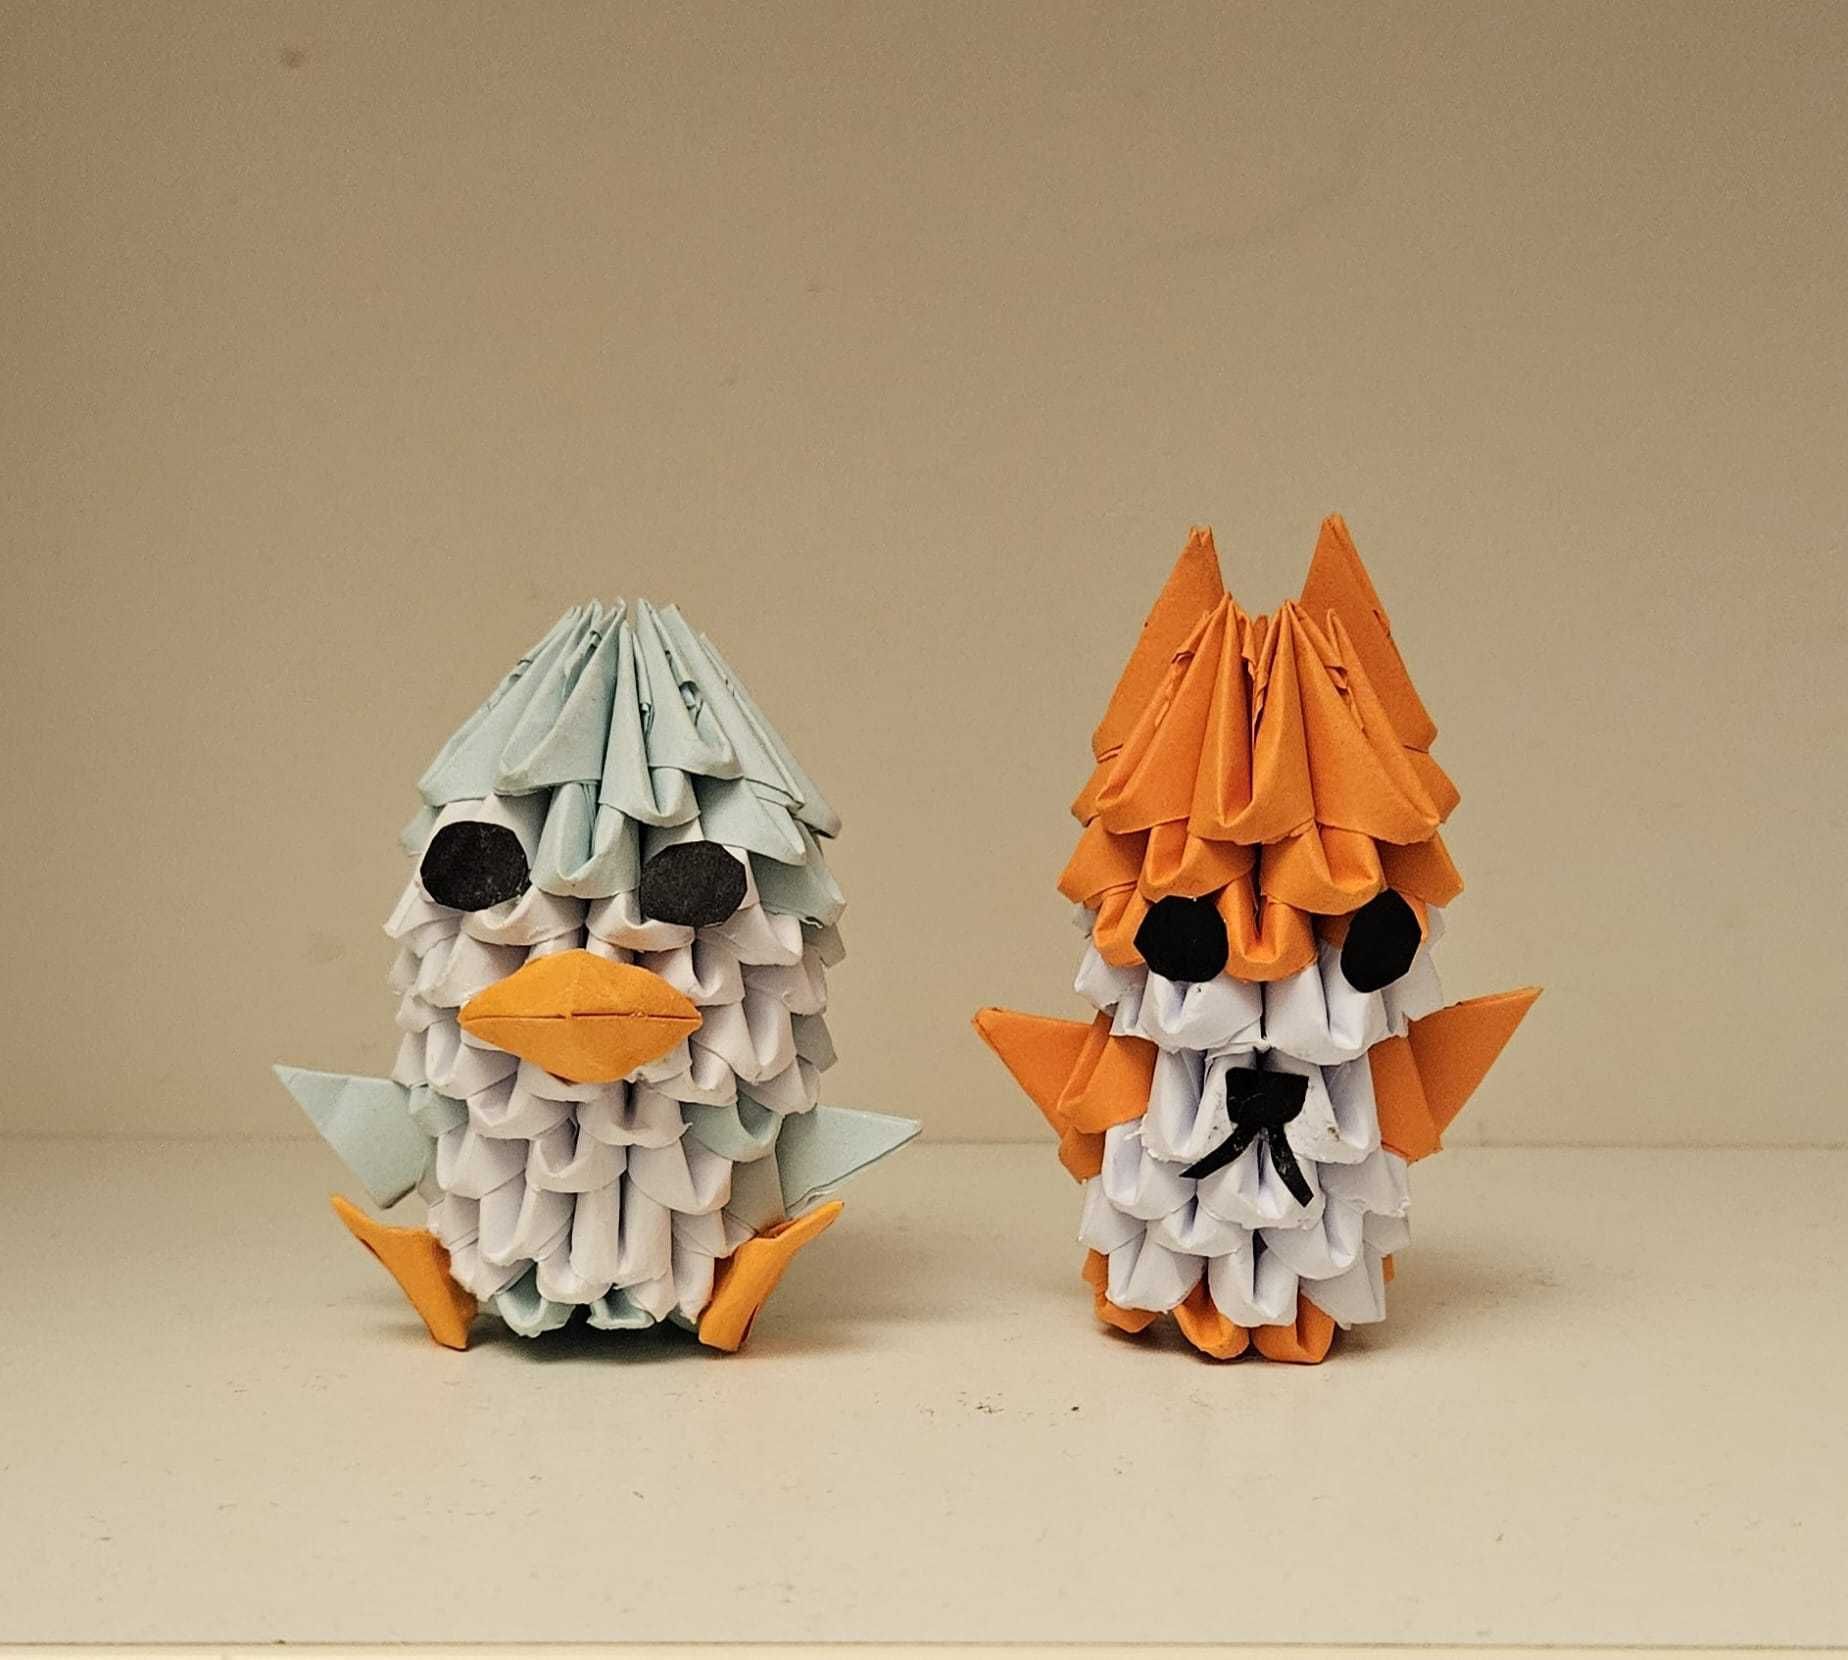 Vand Origami 3D - facute manual